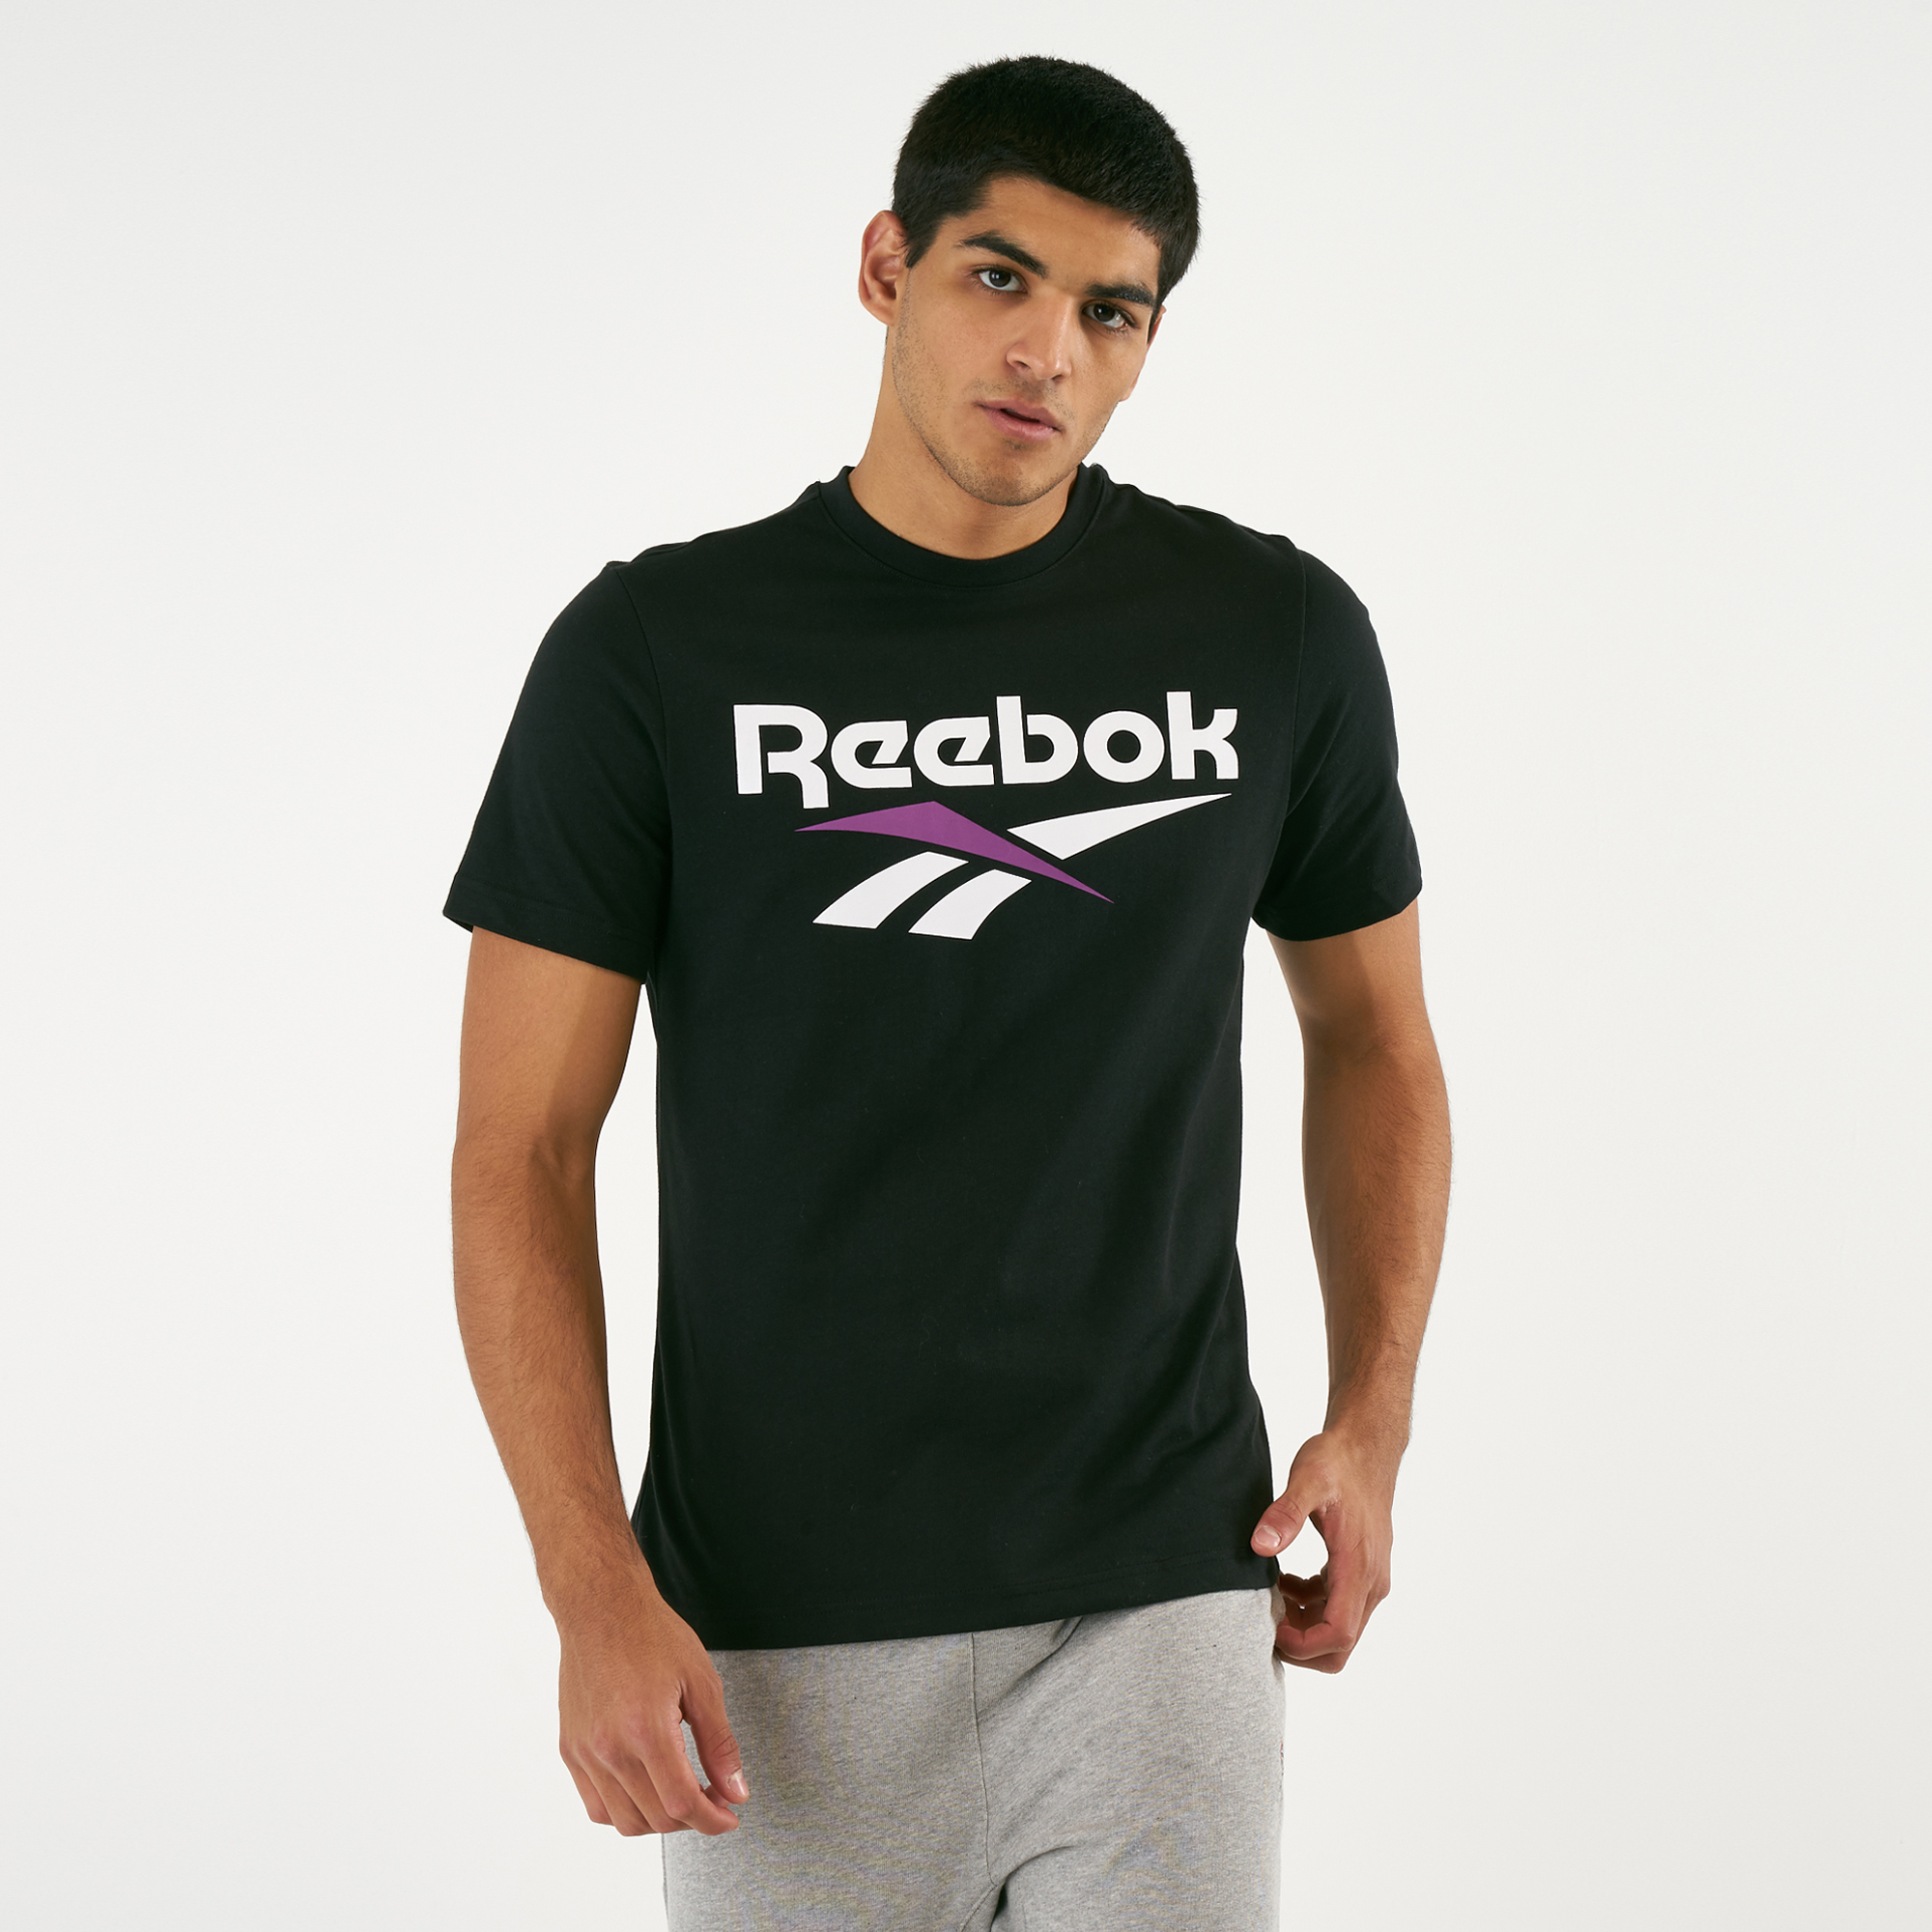 reebok t shirts online offers